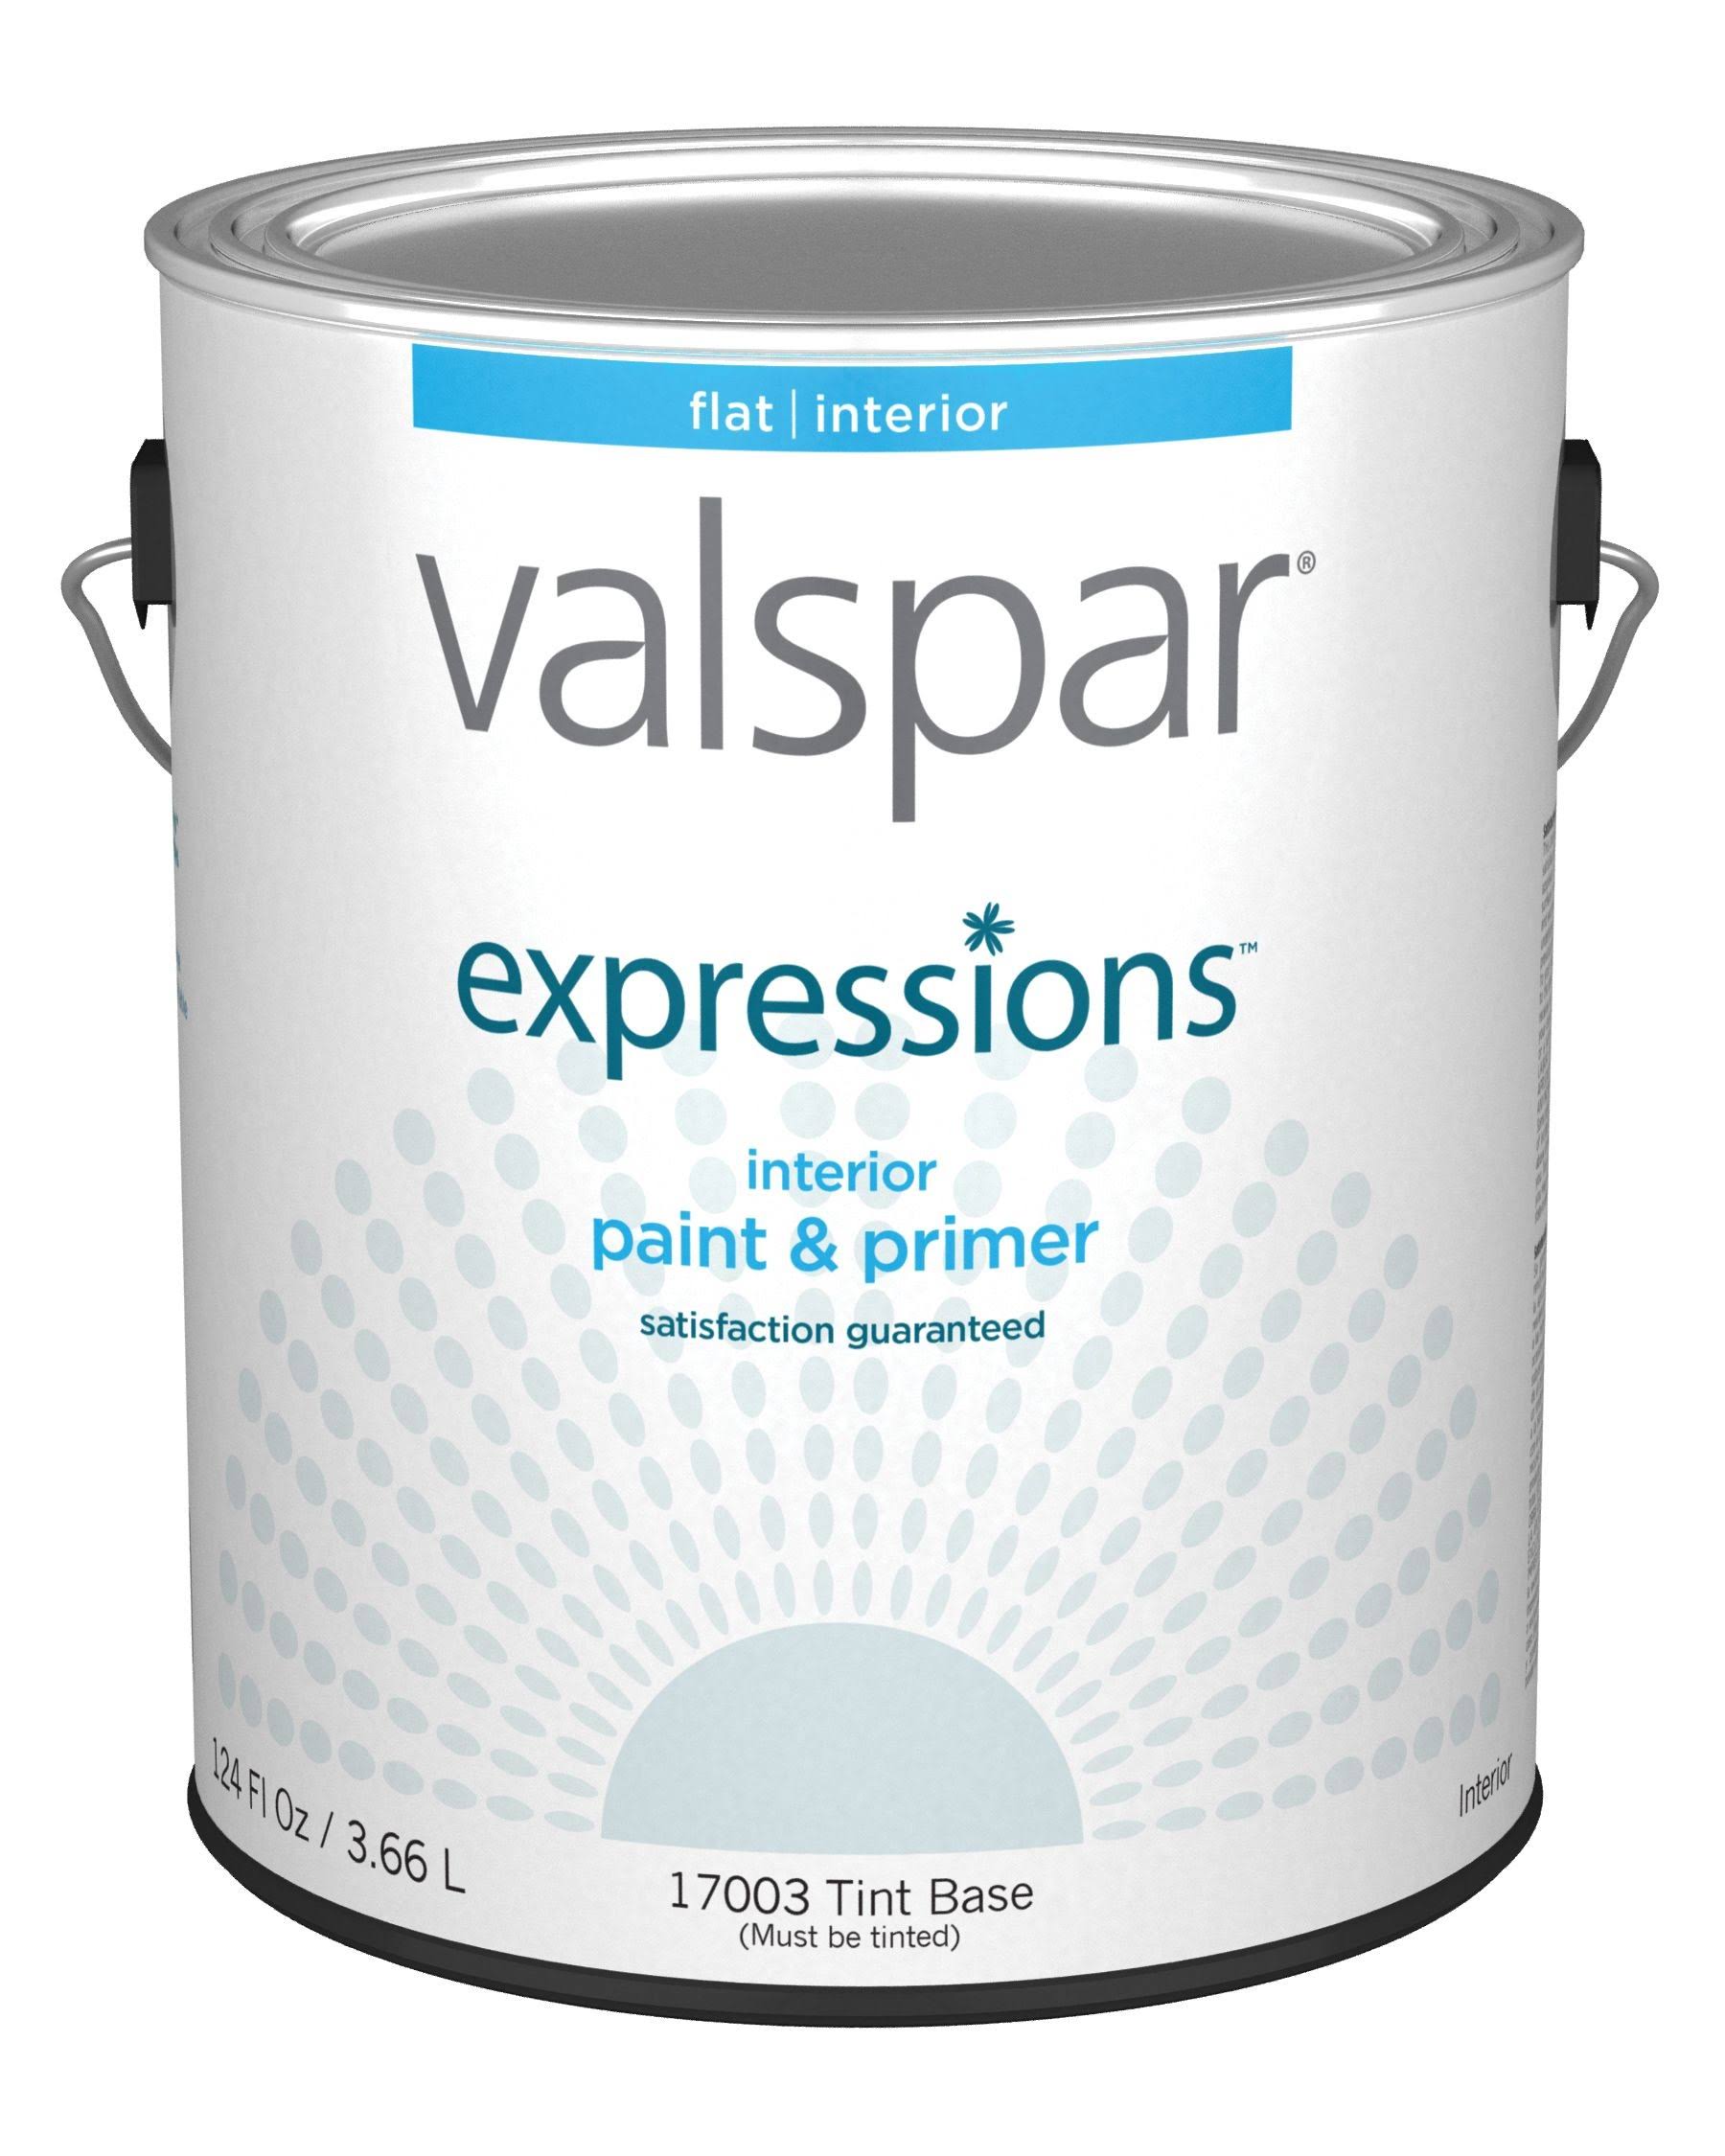 Valspar Expressions Flat Interior Paint Primer - Tint Base